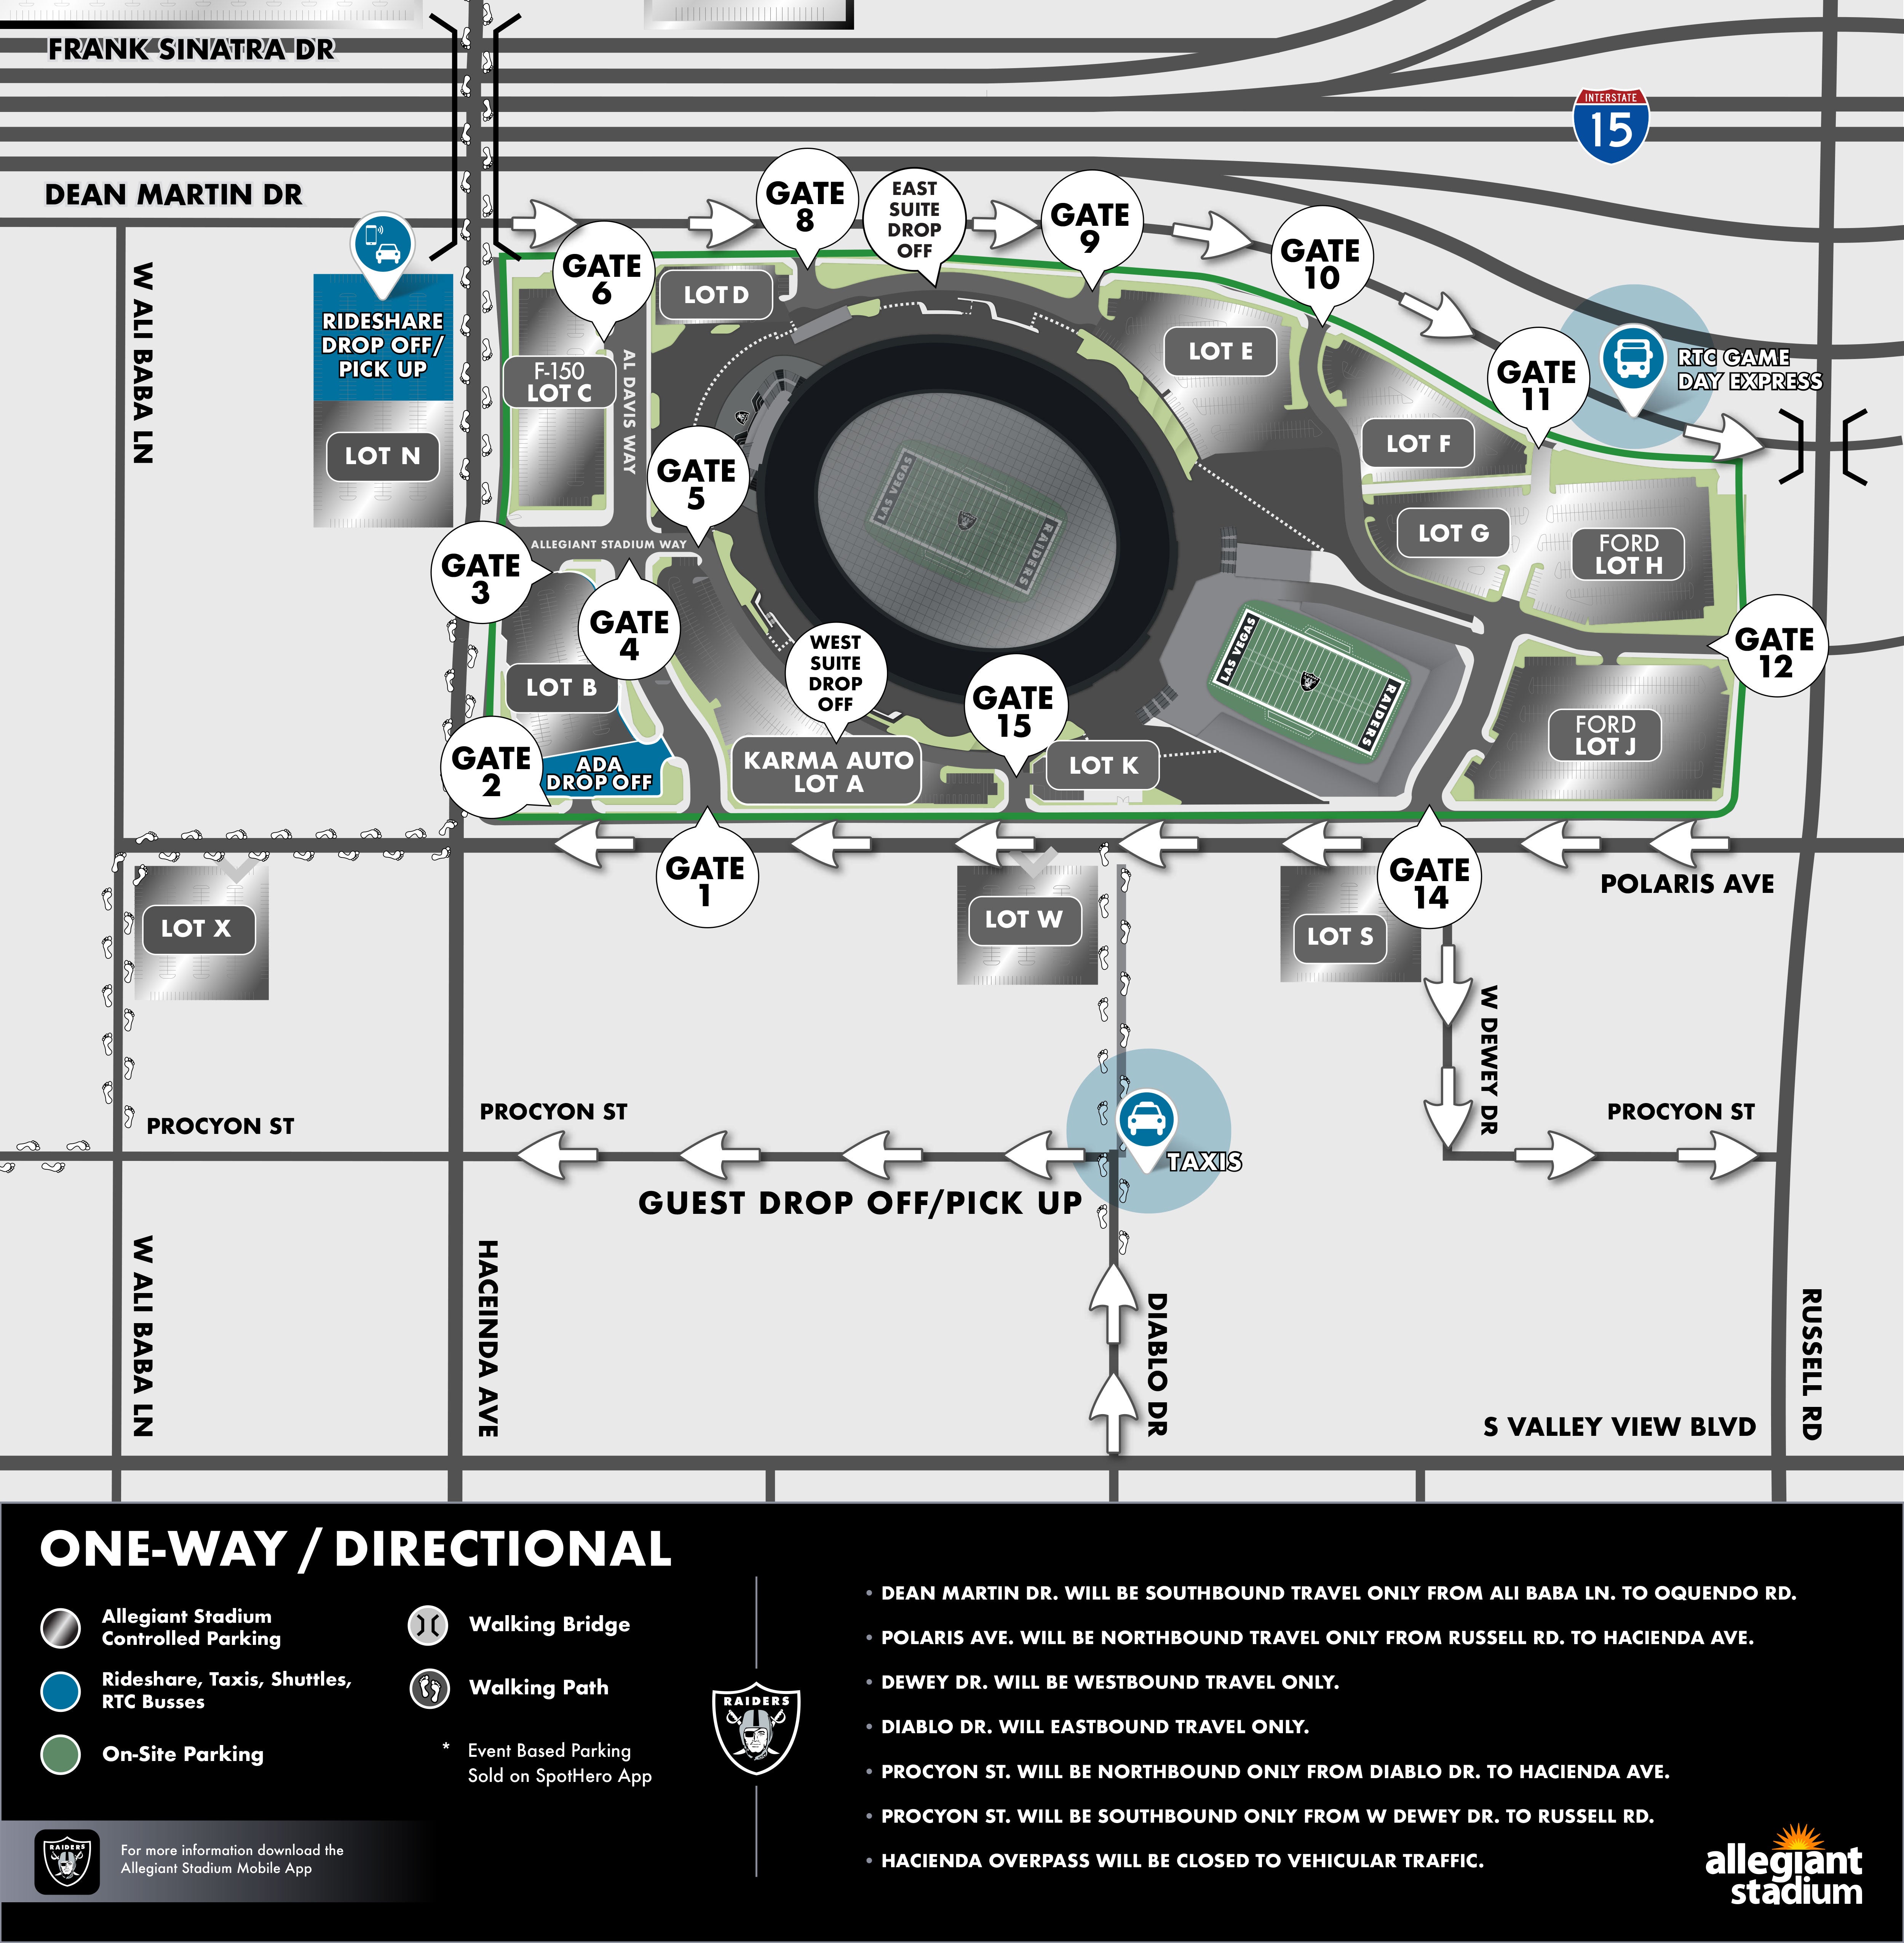 Directions & Parking, Official Website of Allegiant Stadium